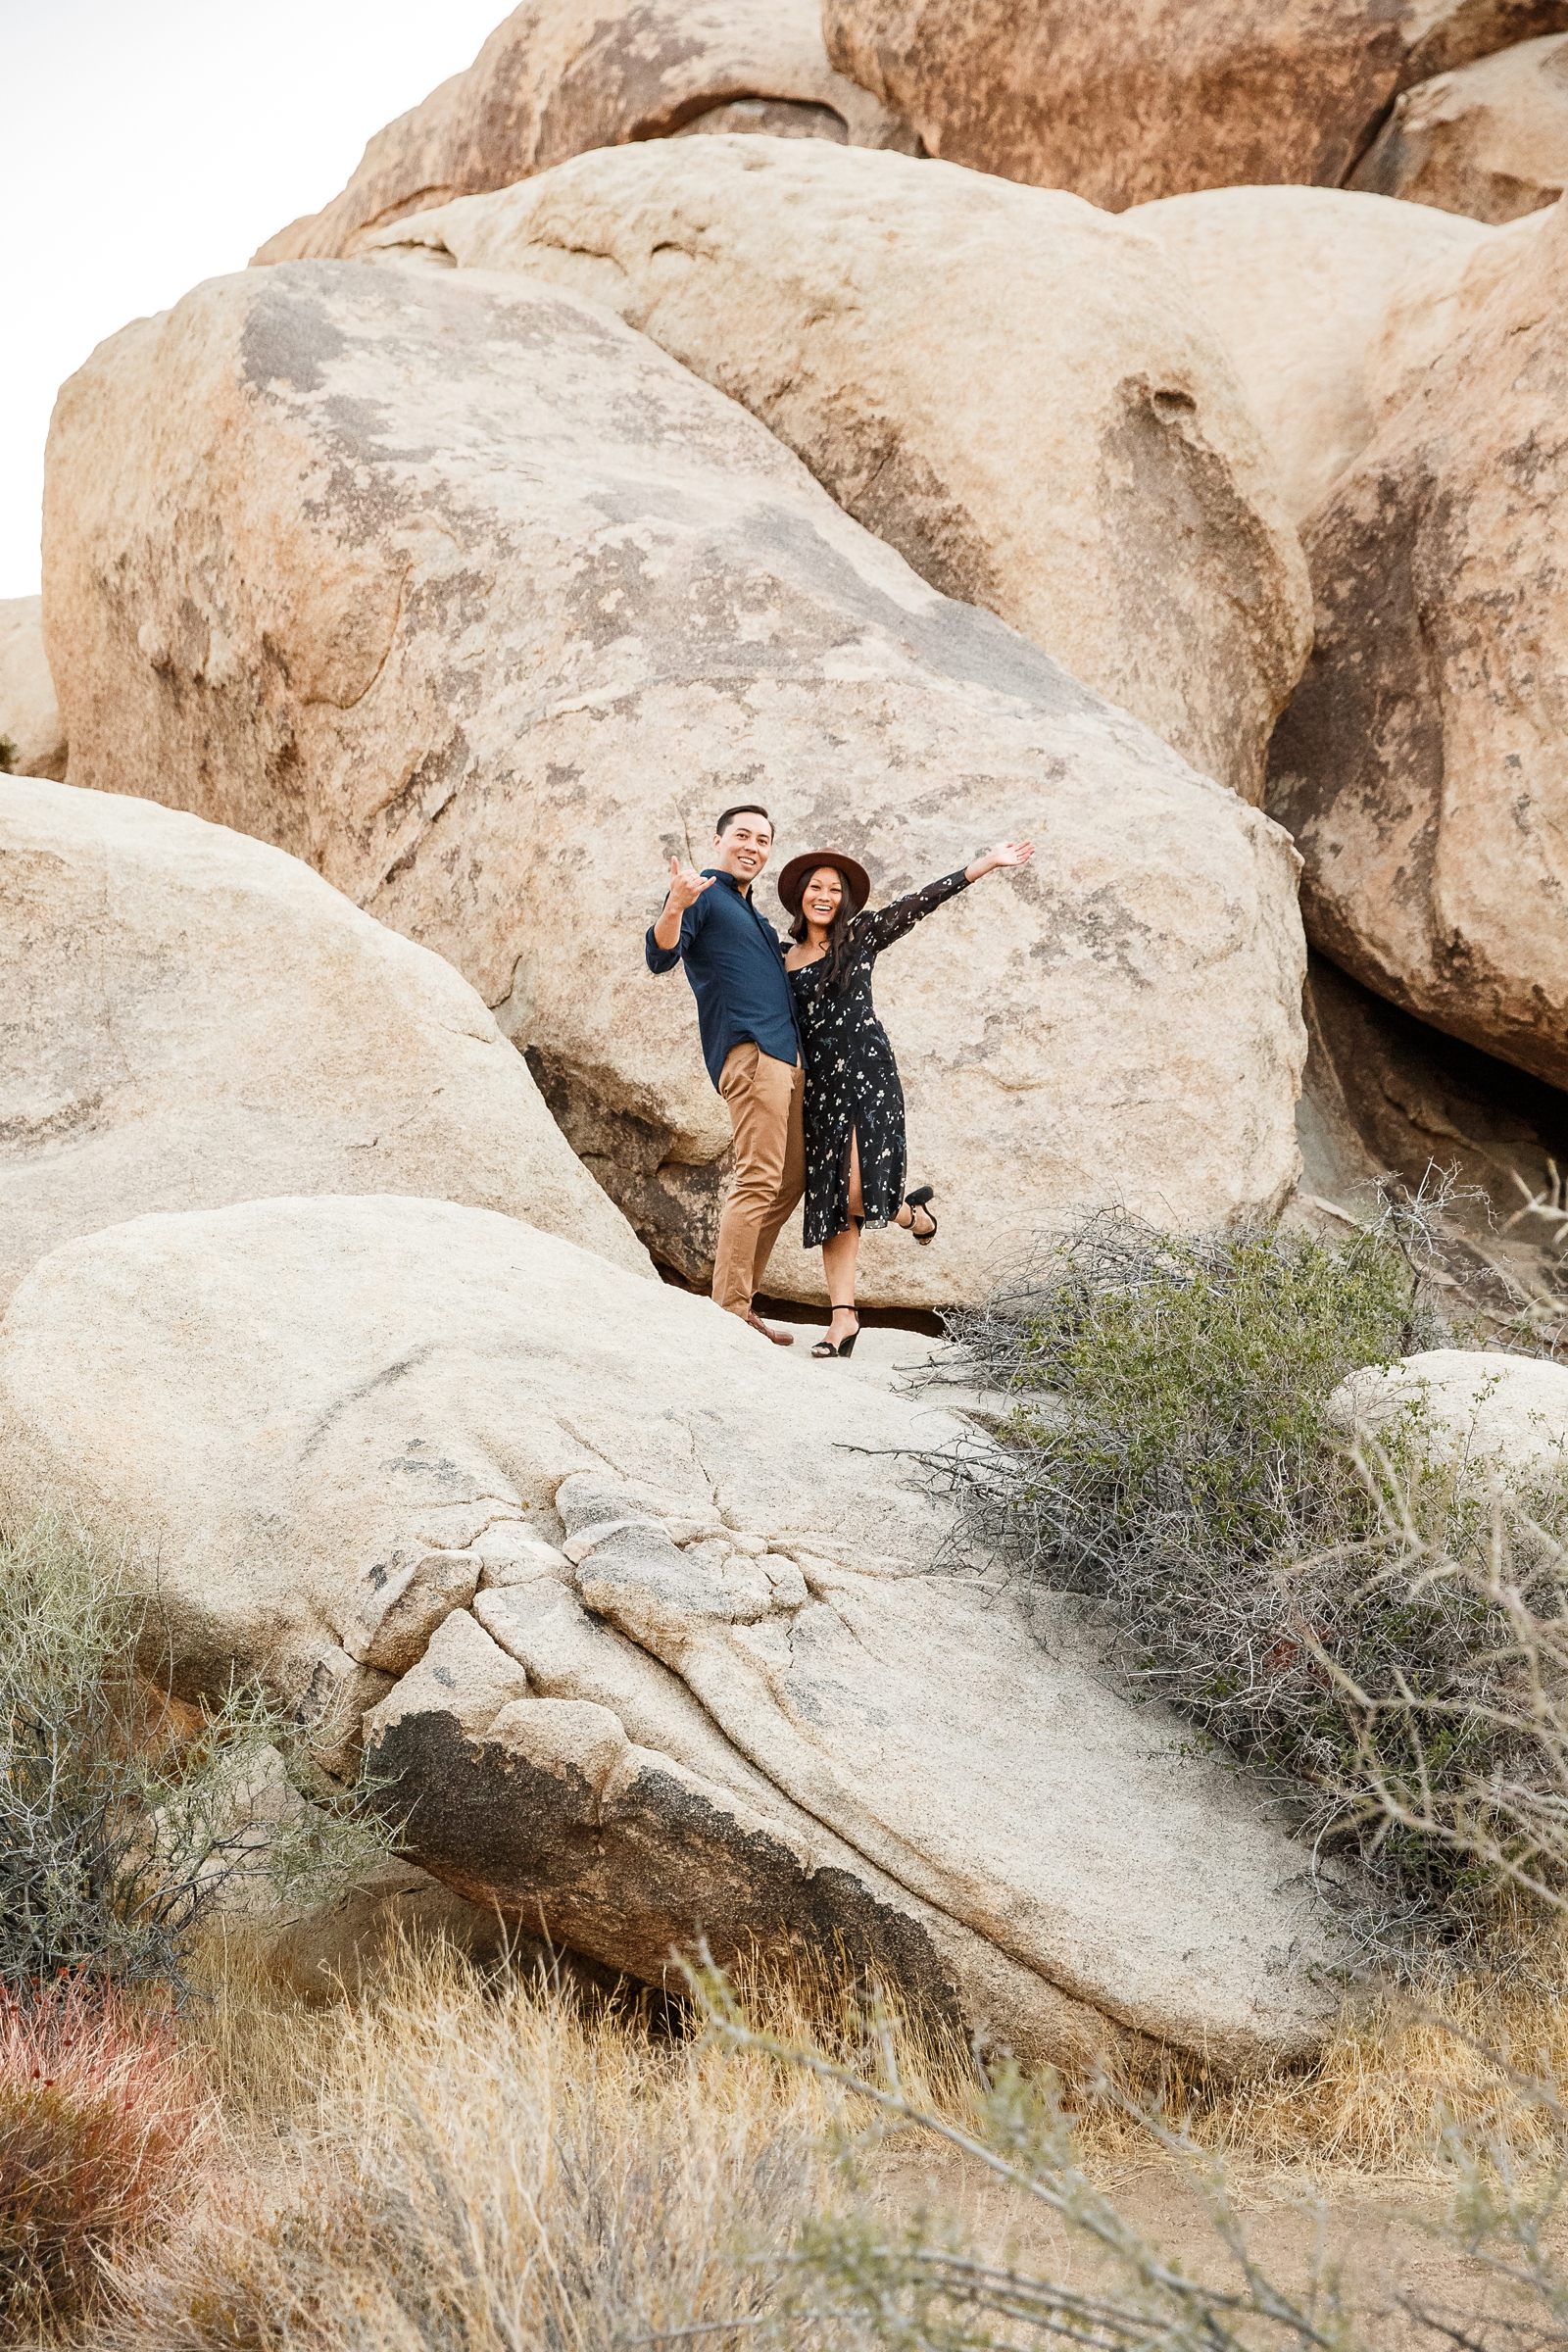 Engaged couple having fun on the rocks in Joshua Tree National Park.